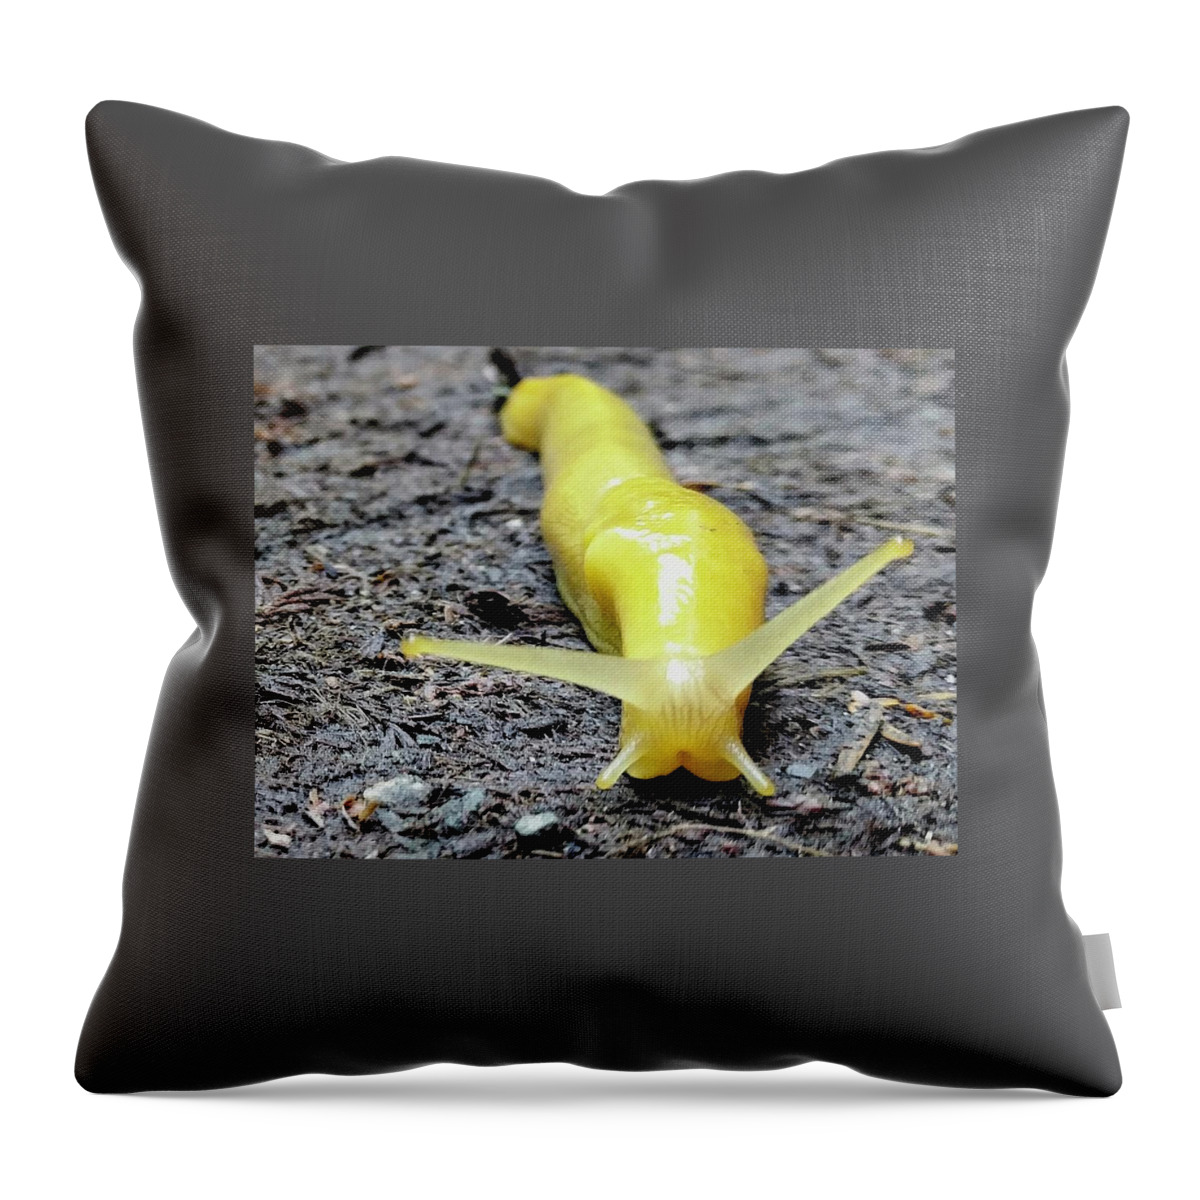 Yellow Throw Pillow featuring the photograph Banana Slug by Misty Morehead